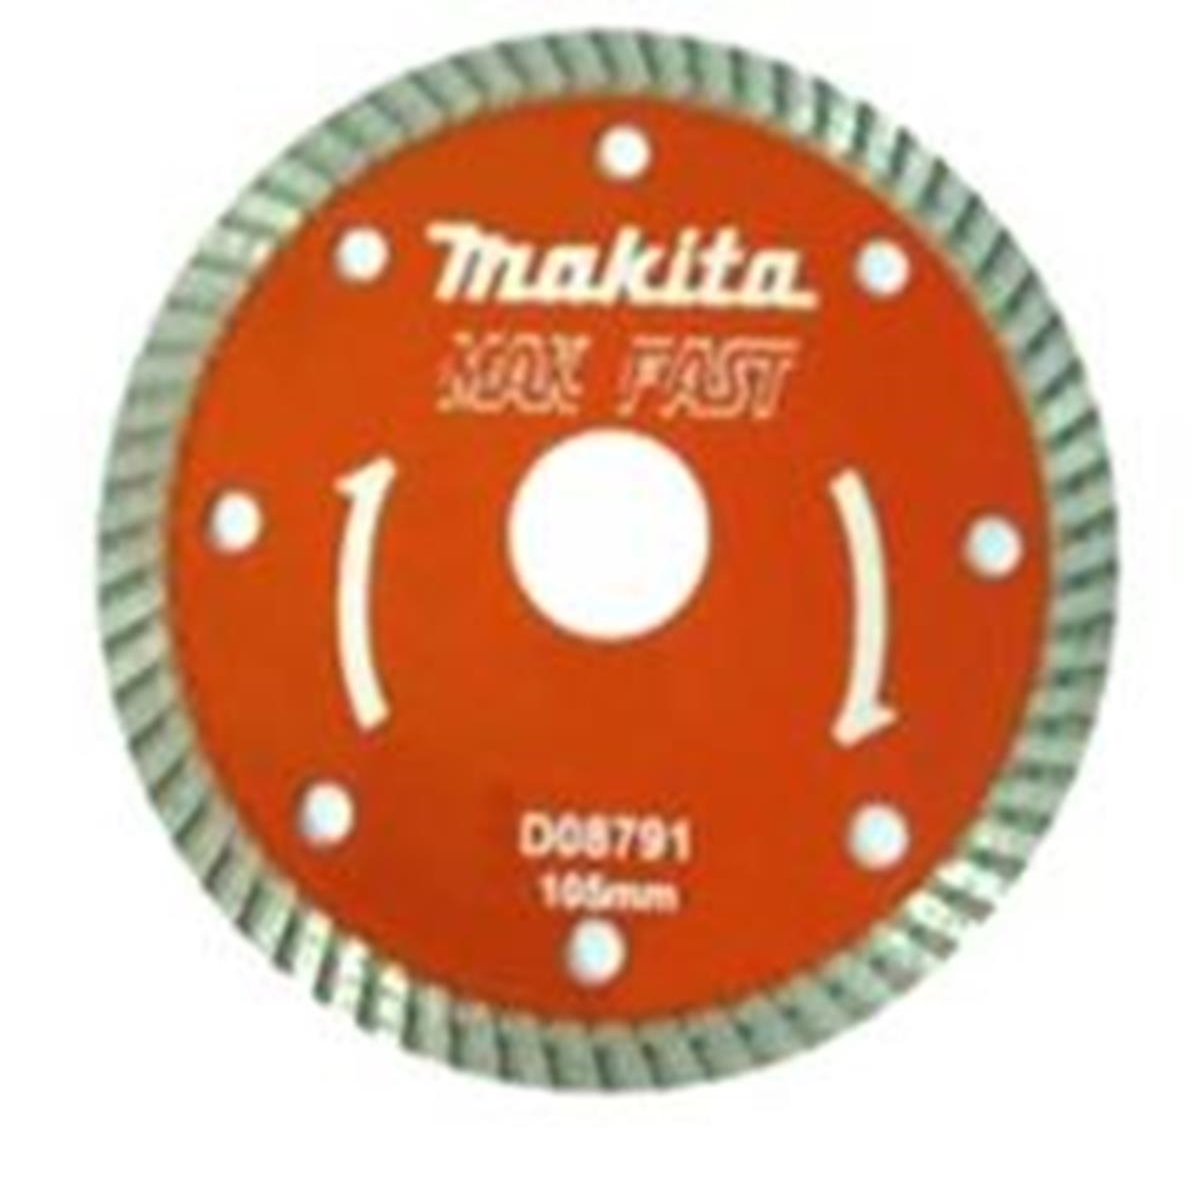 Activamente Diagnosticar niebla Disco Diamantado Makita D08791 (297-2010) -Grupo Record